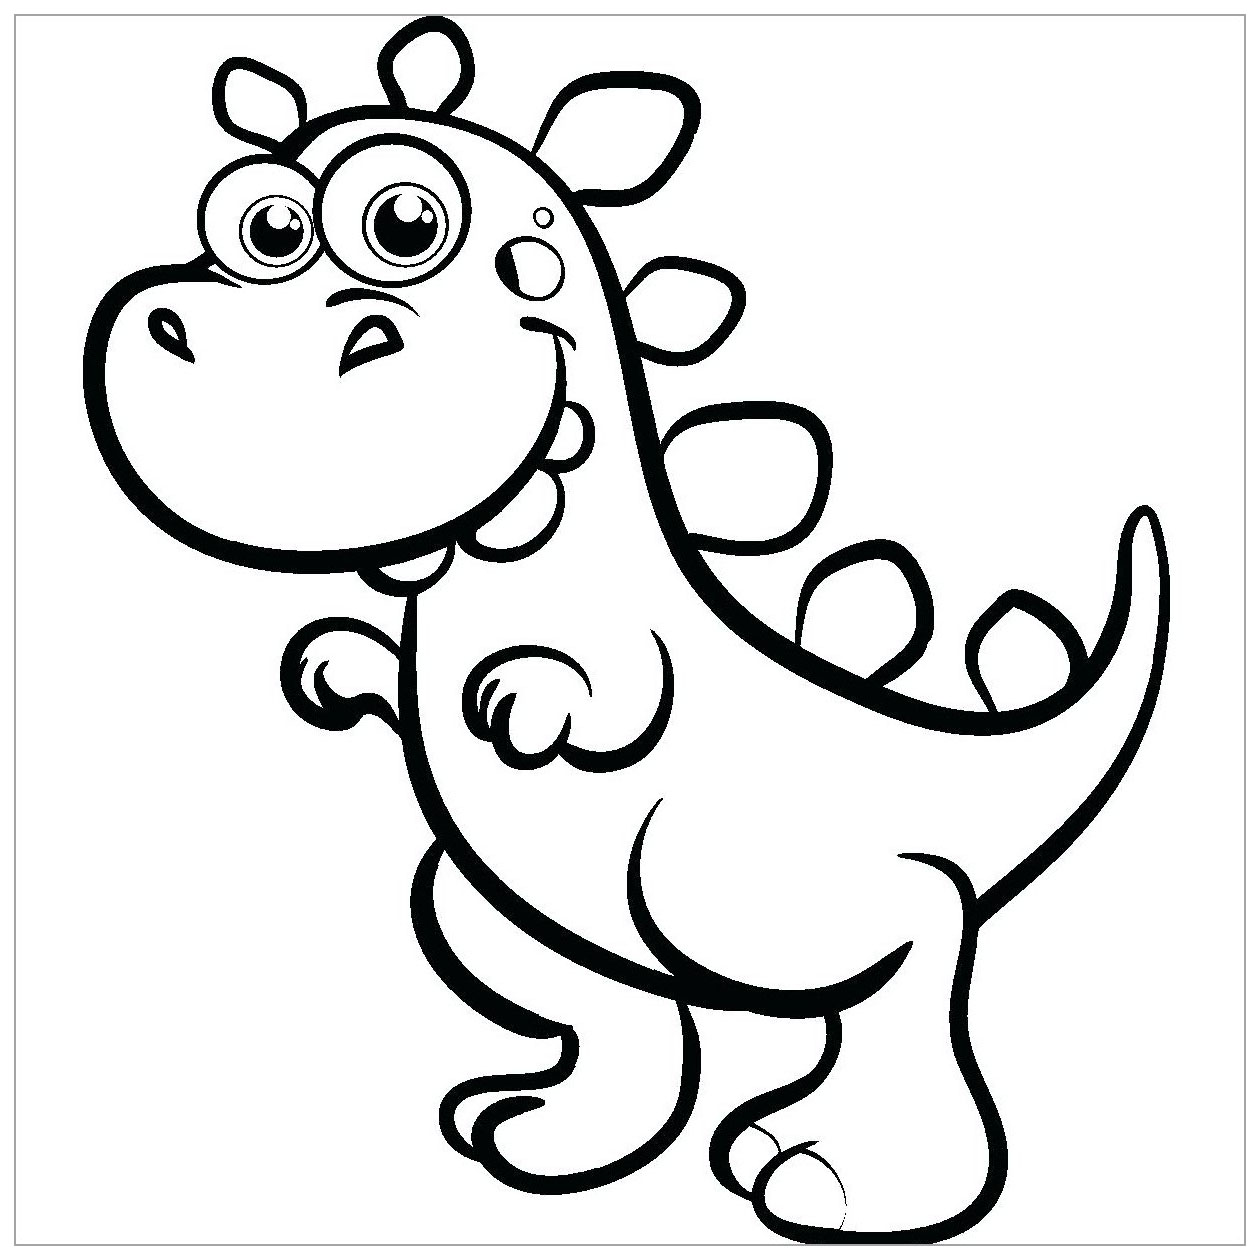 Dinosaurs to download : T Rex cartoon - Dinosaurs Kids ...